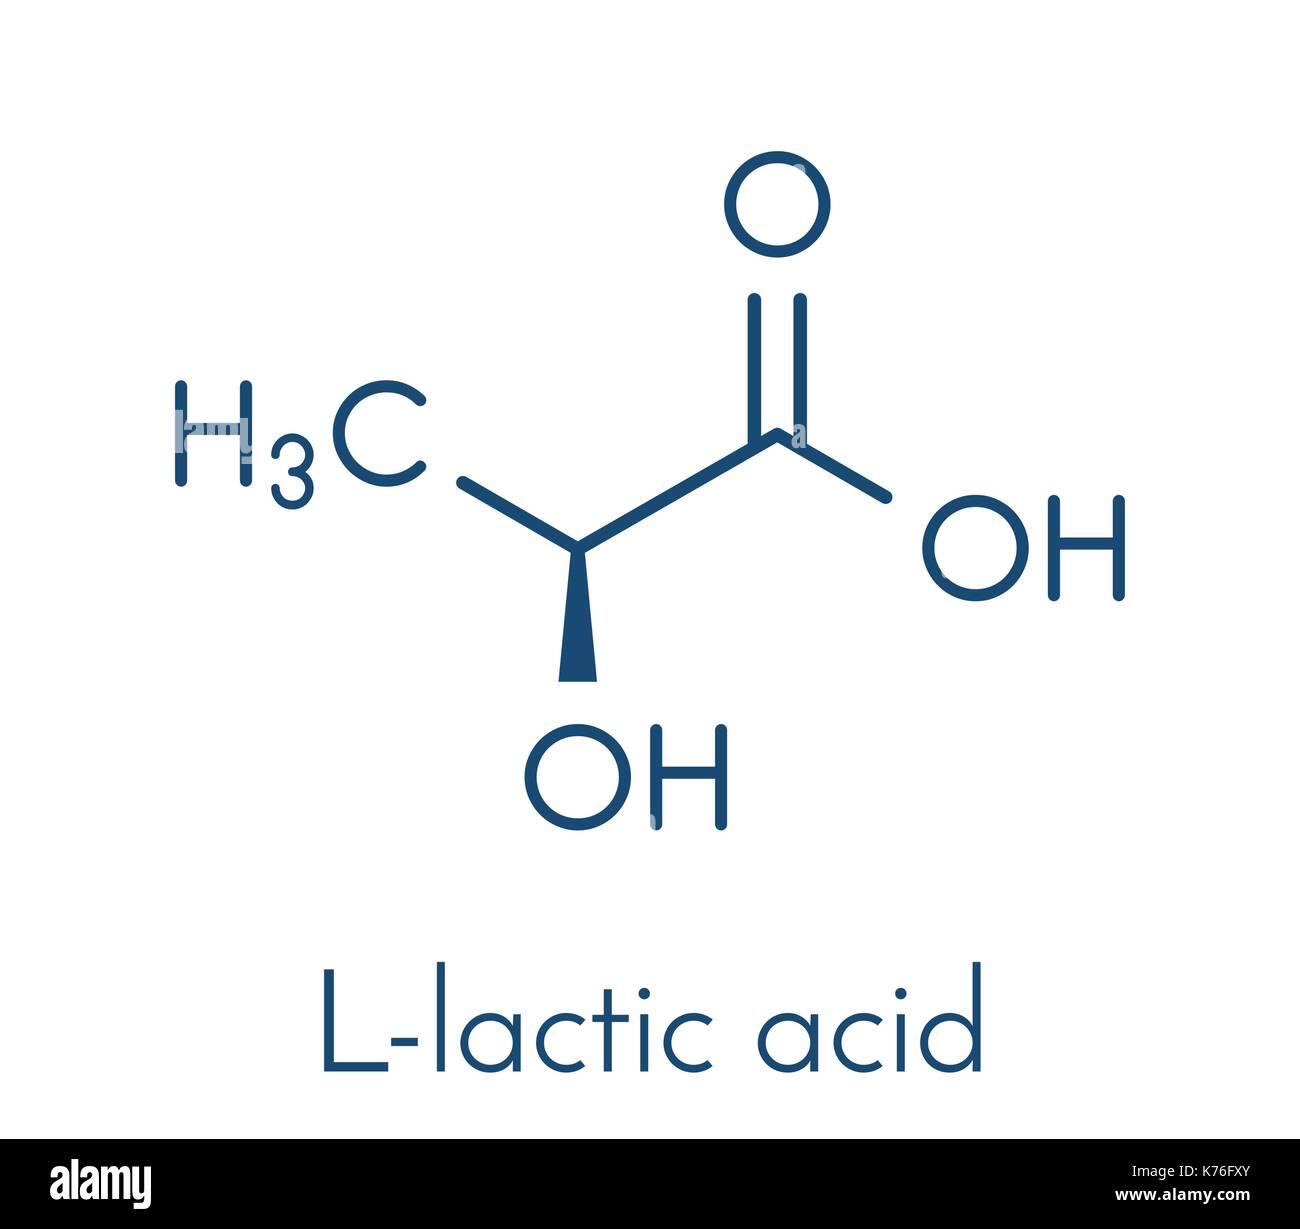 Lactic acid (L-lactic acid) milk sugar molecule. Building block of polylactic acid (PLA) bioplastic. Found in milk. Skeletal formula. Stock Vector